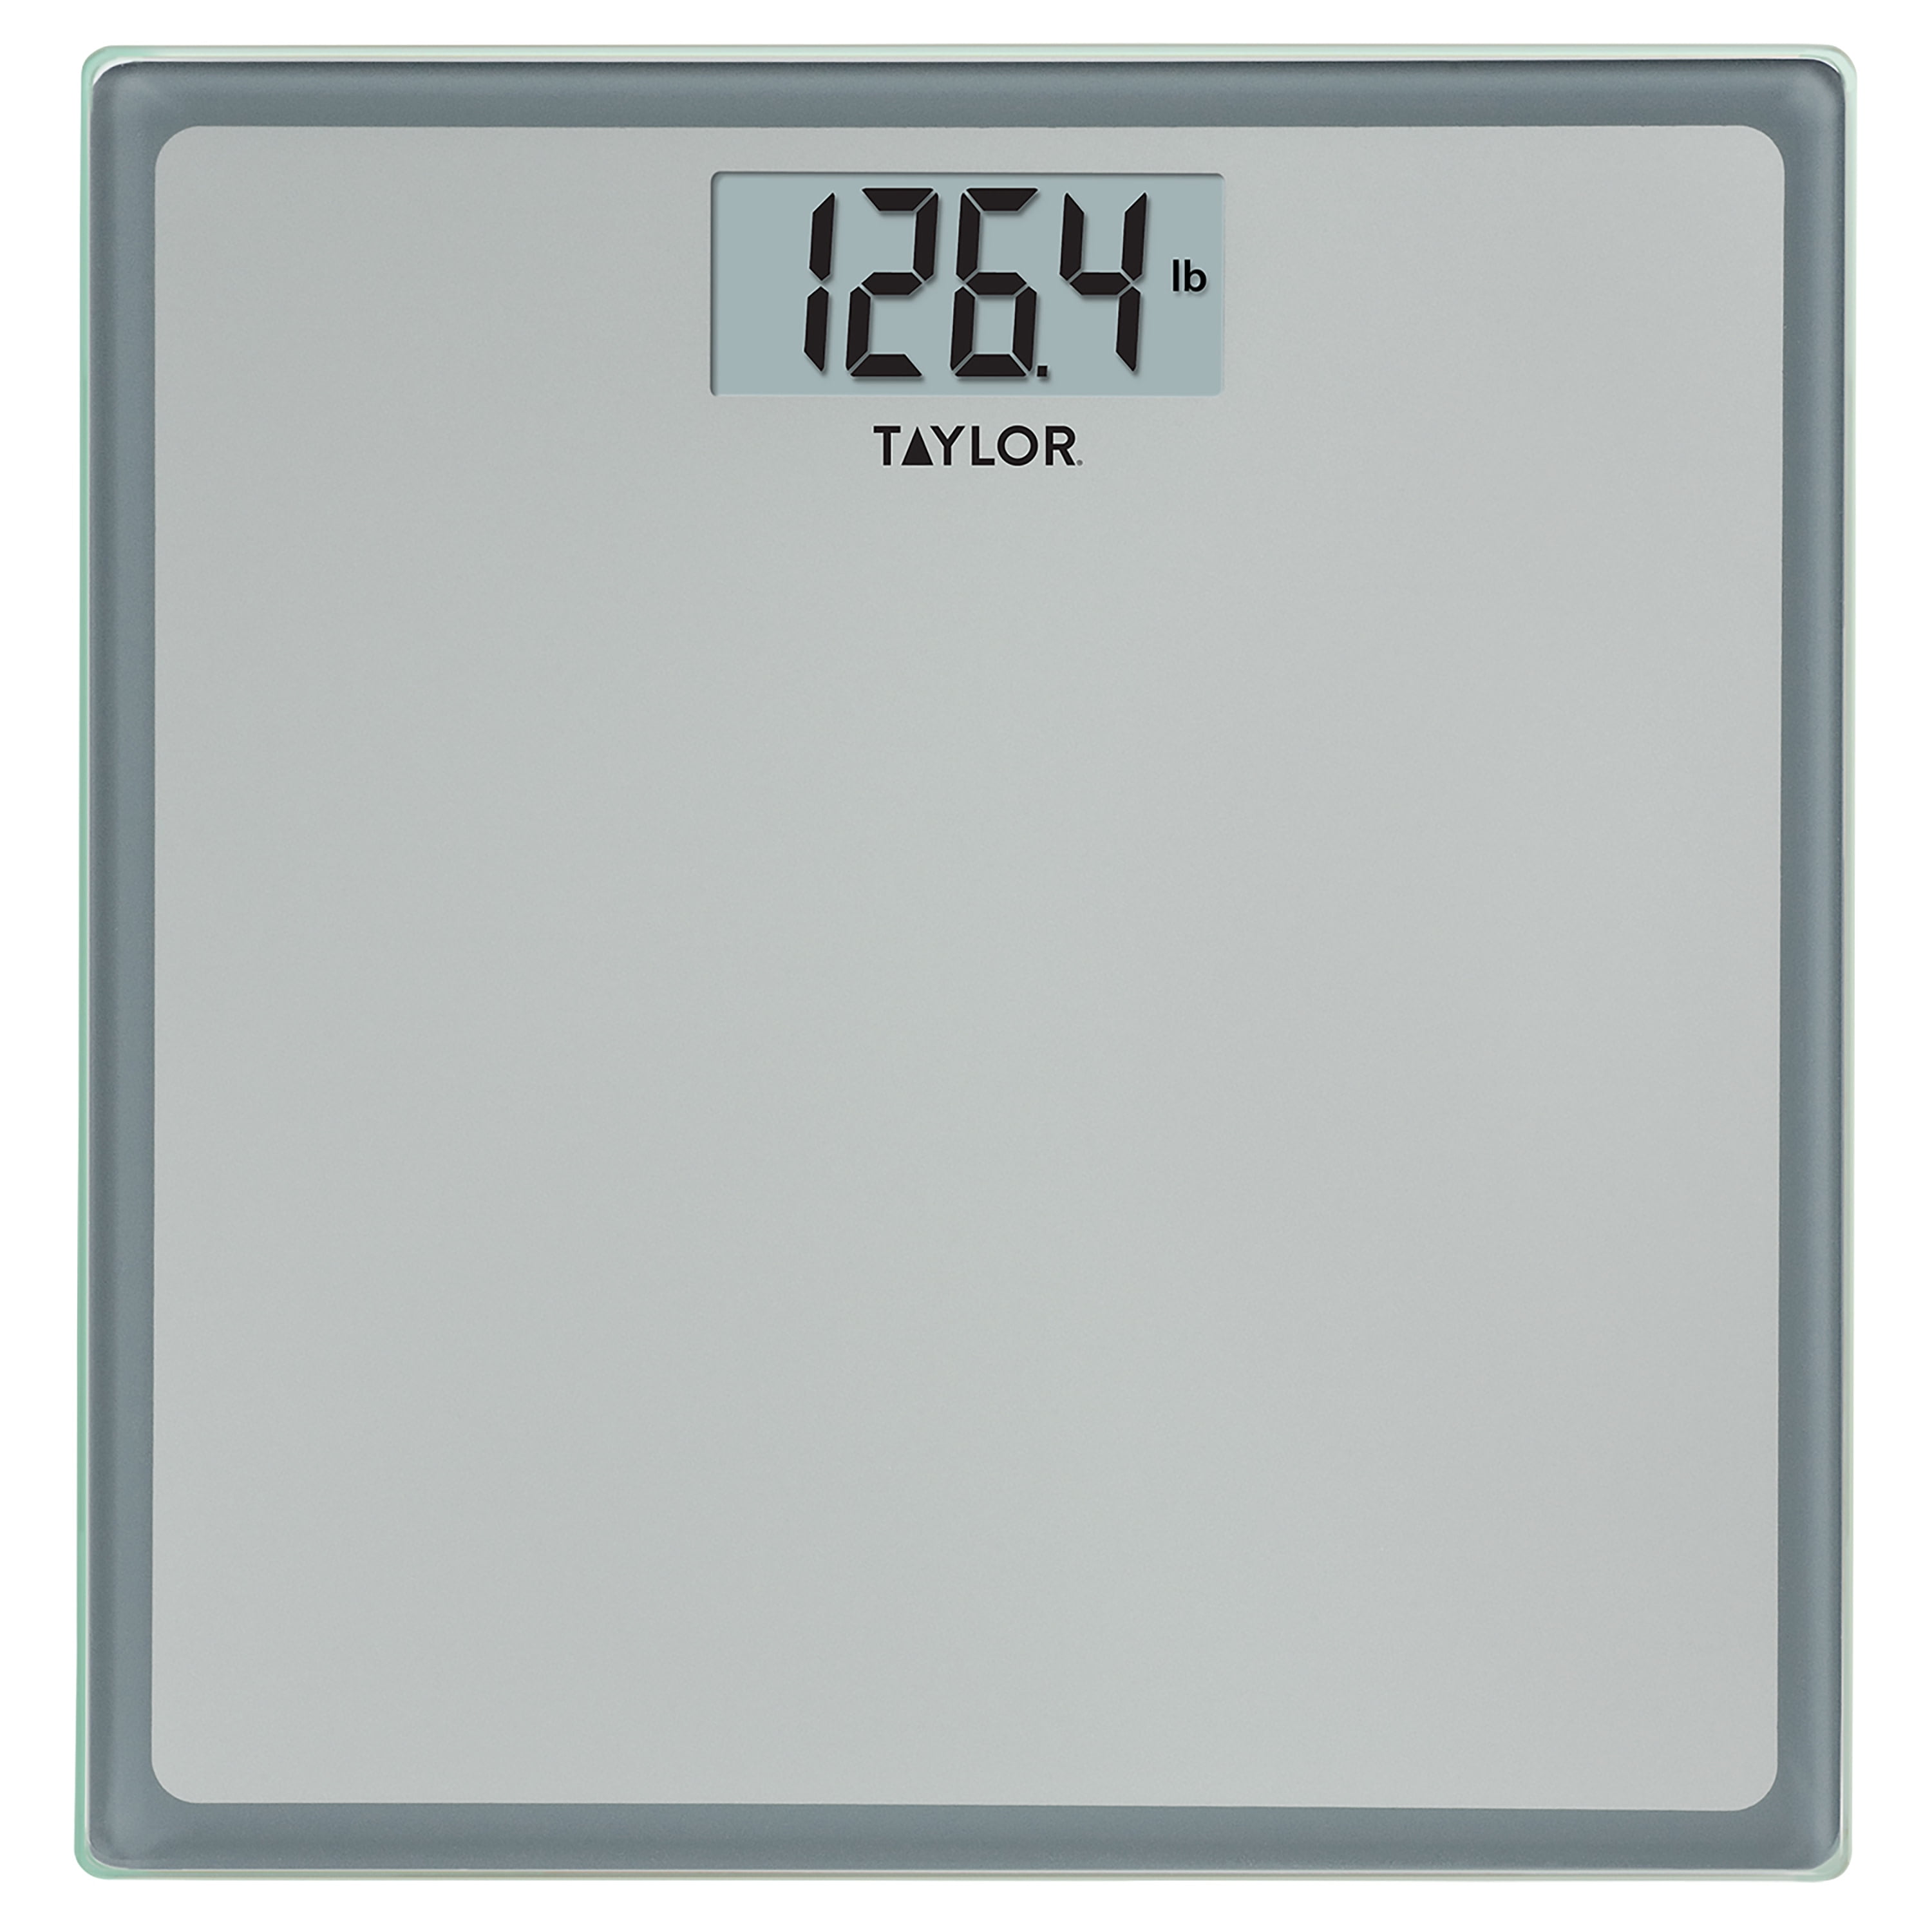 Taylor Glass Digital Bath Scale, Monitoring & Testing, Beauty & Health